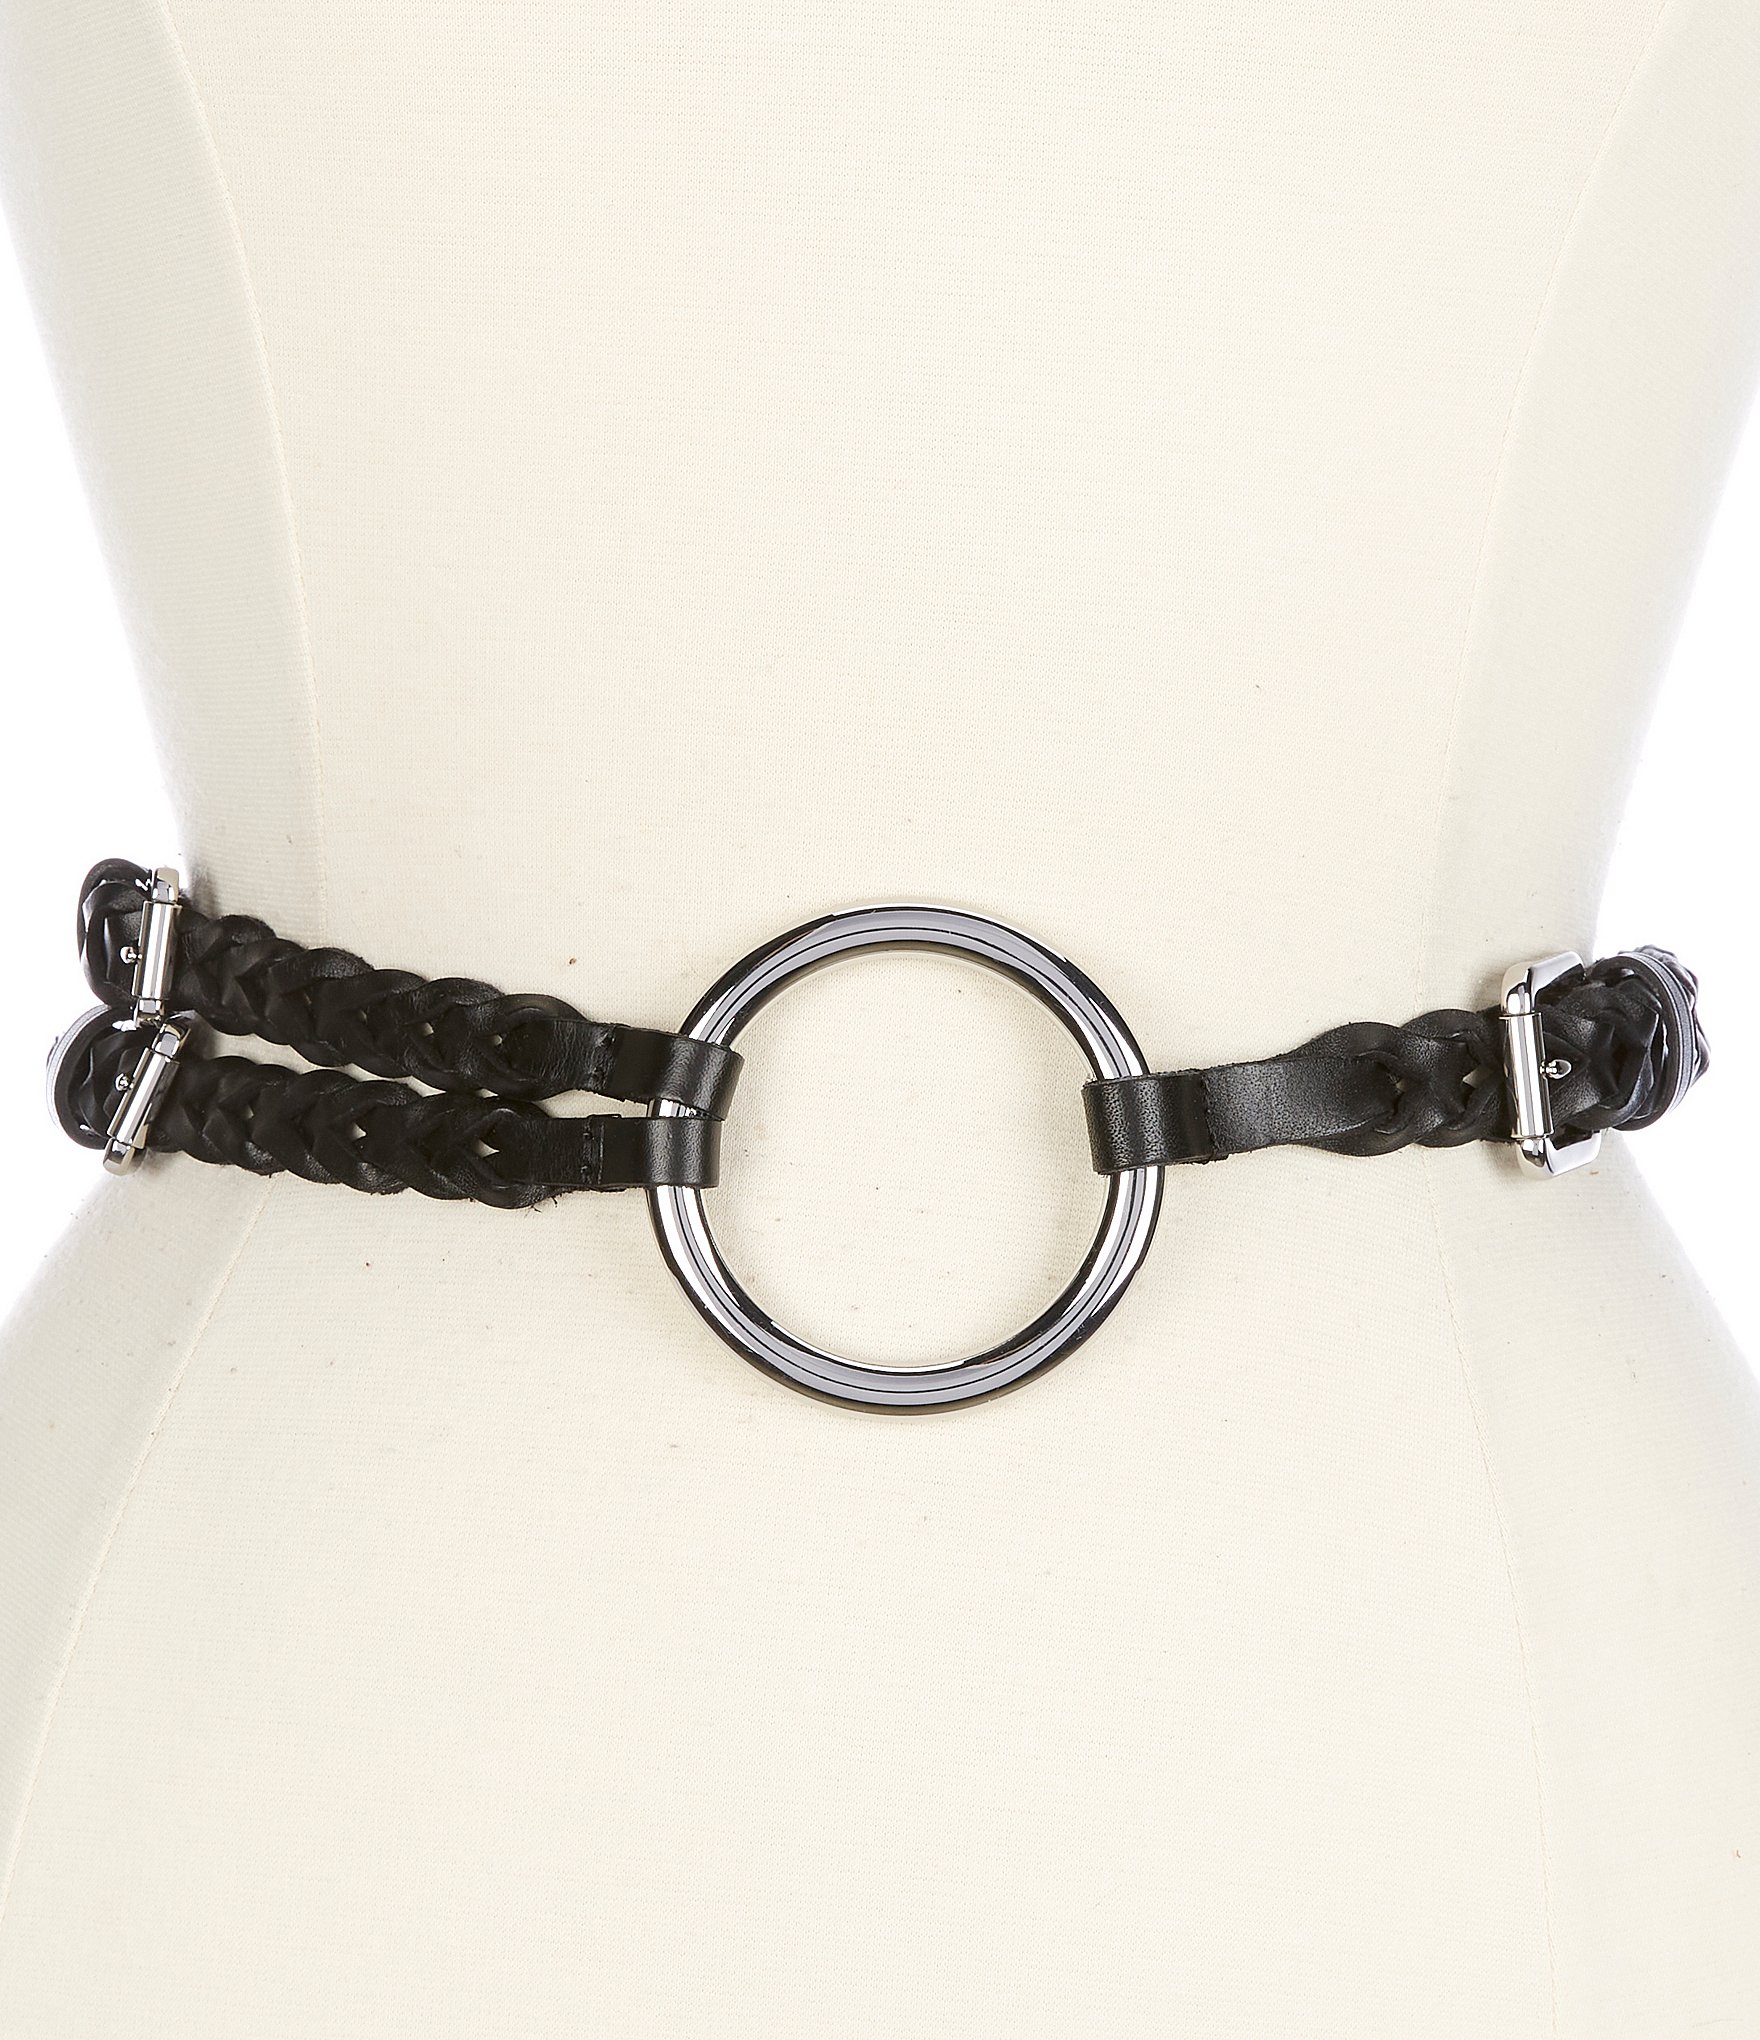 Lauren Ralph Lauren 0.75 Tri-Strap O-Ring Braided Leather Belt